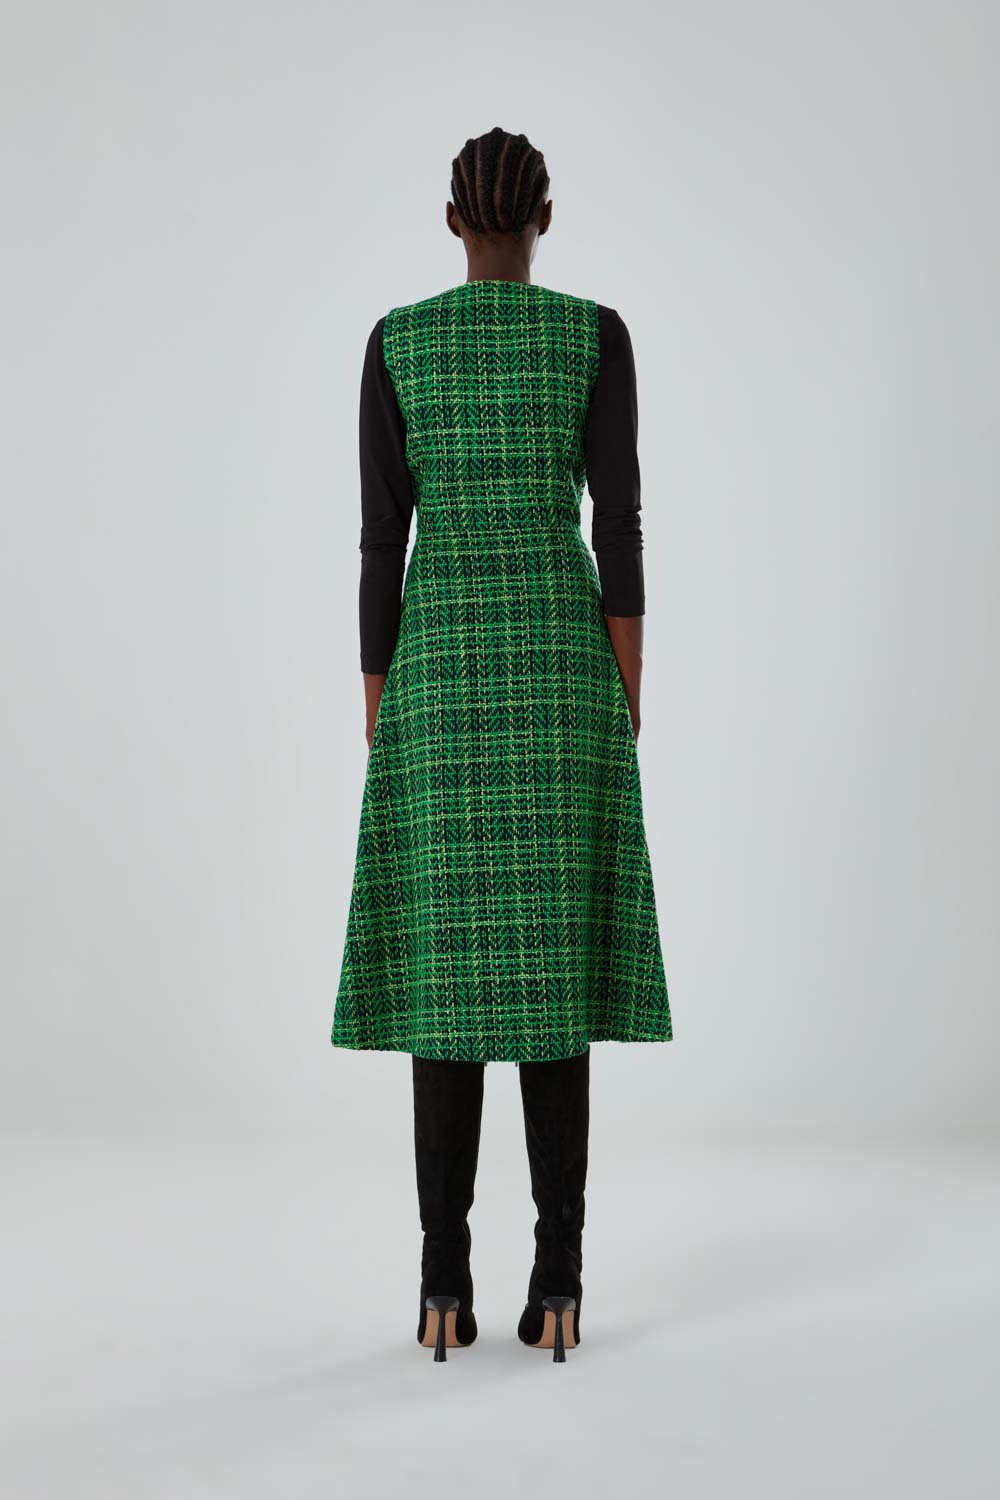 Tweed Patterned Green Gilet Dress